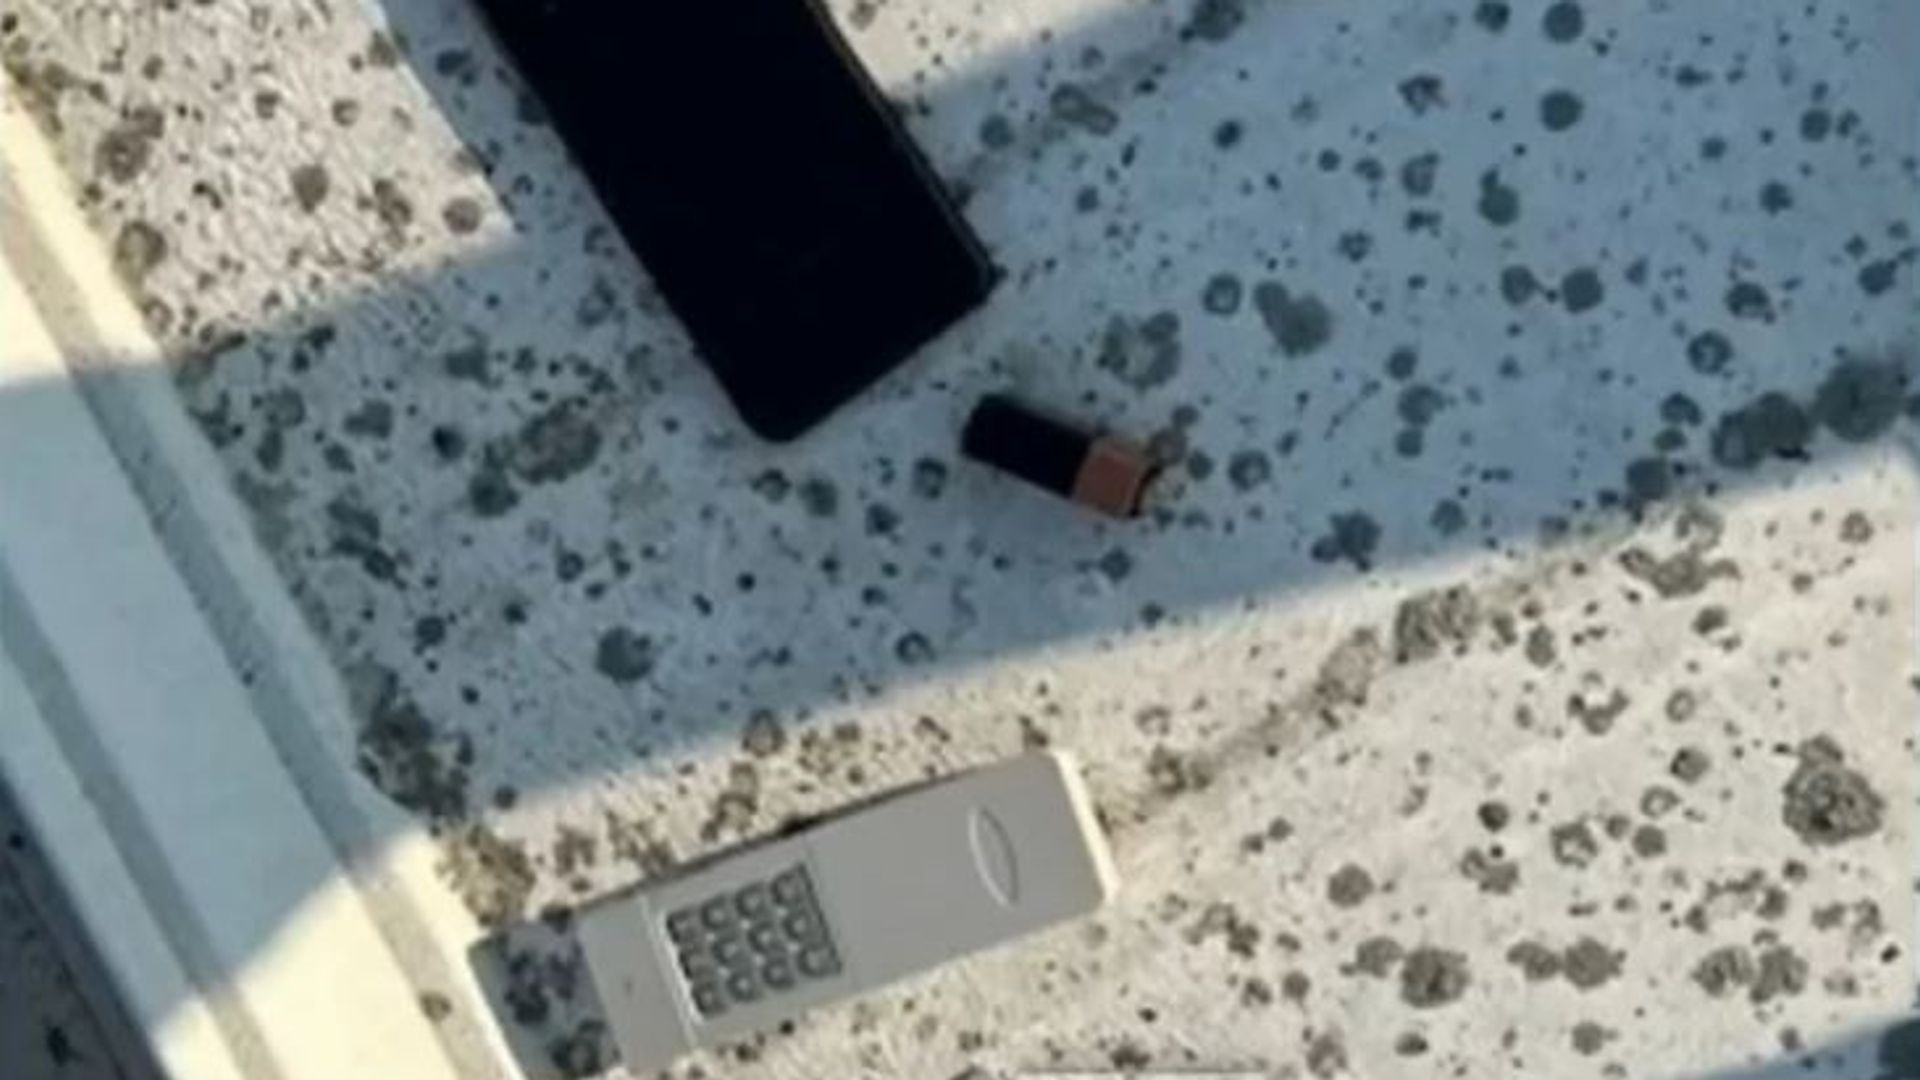 Remote detonator found with Trump gunman after snipers shot him dead